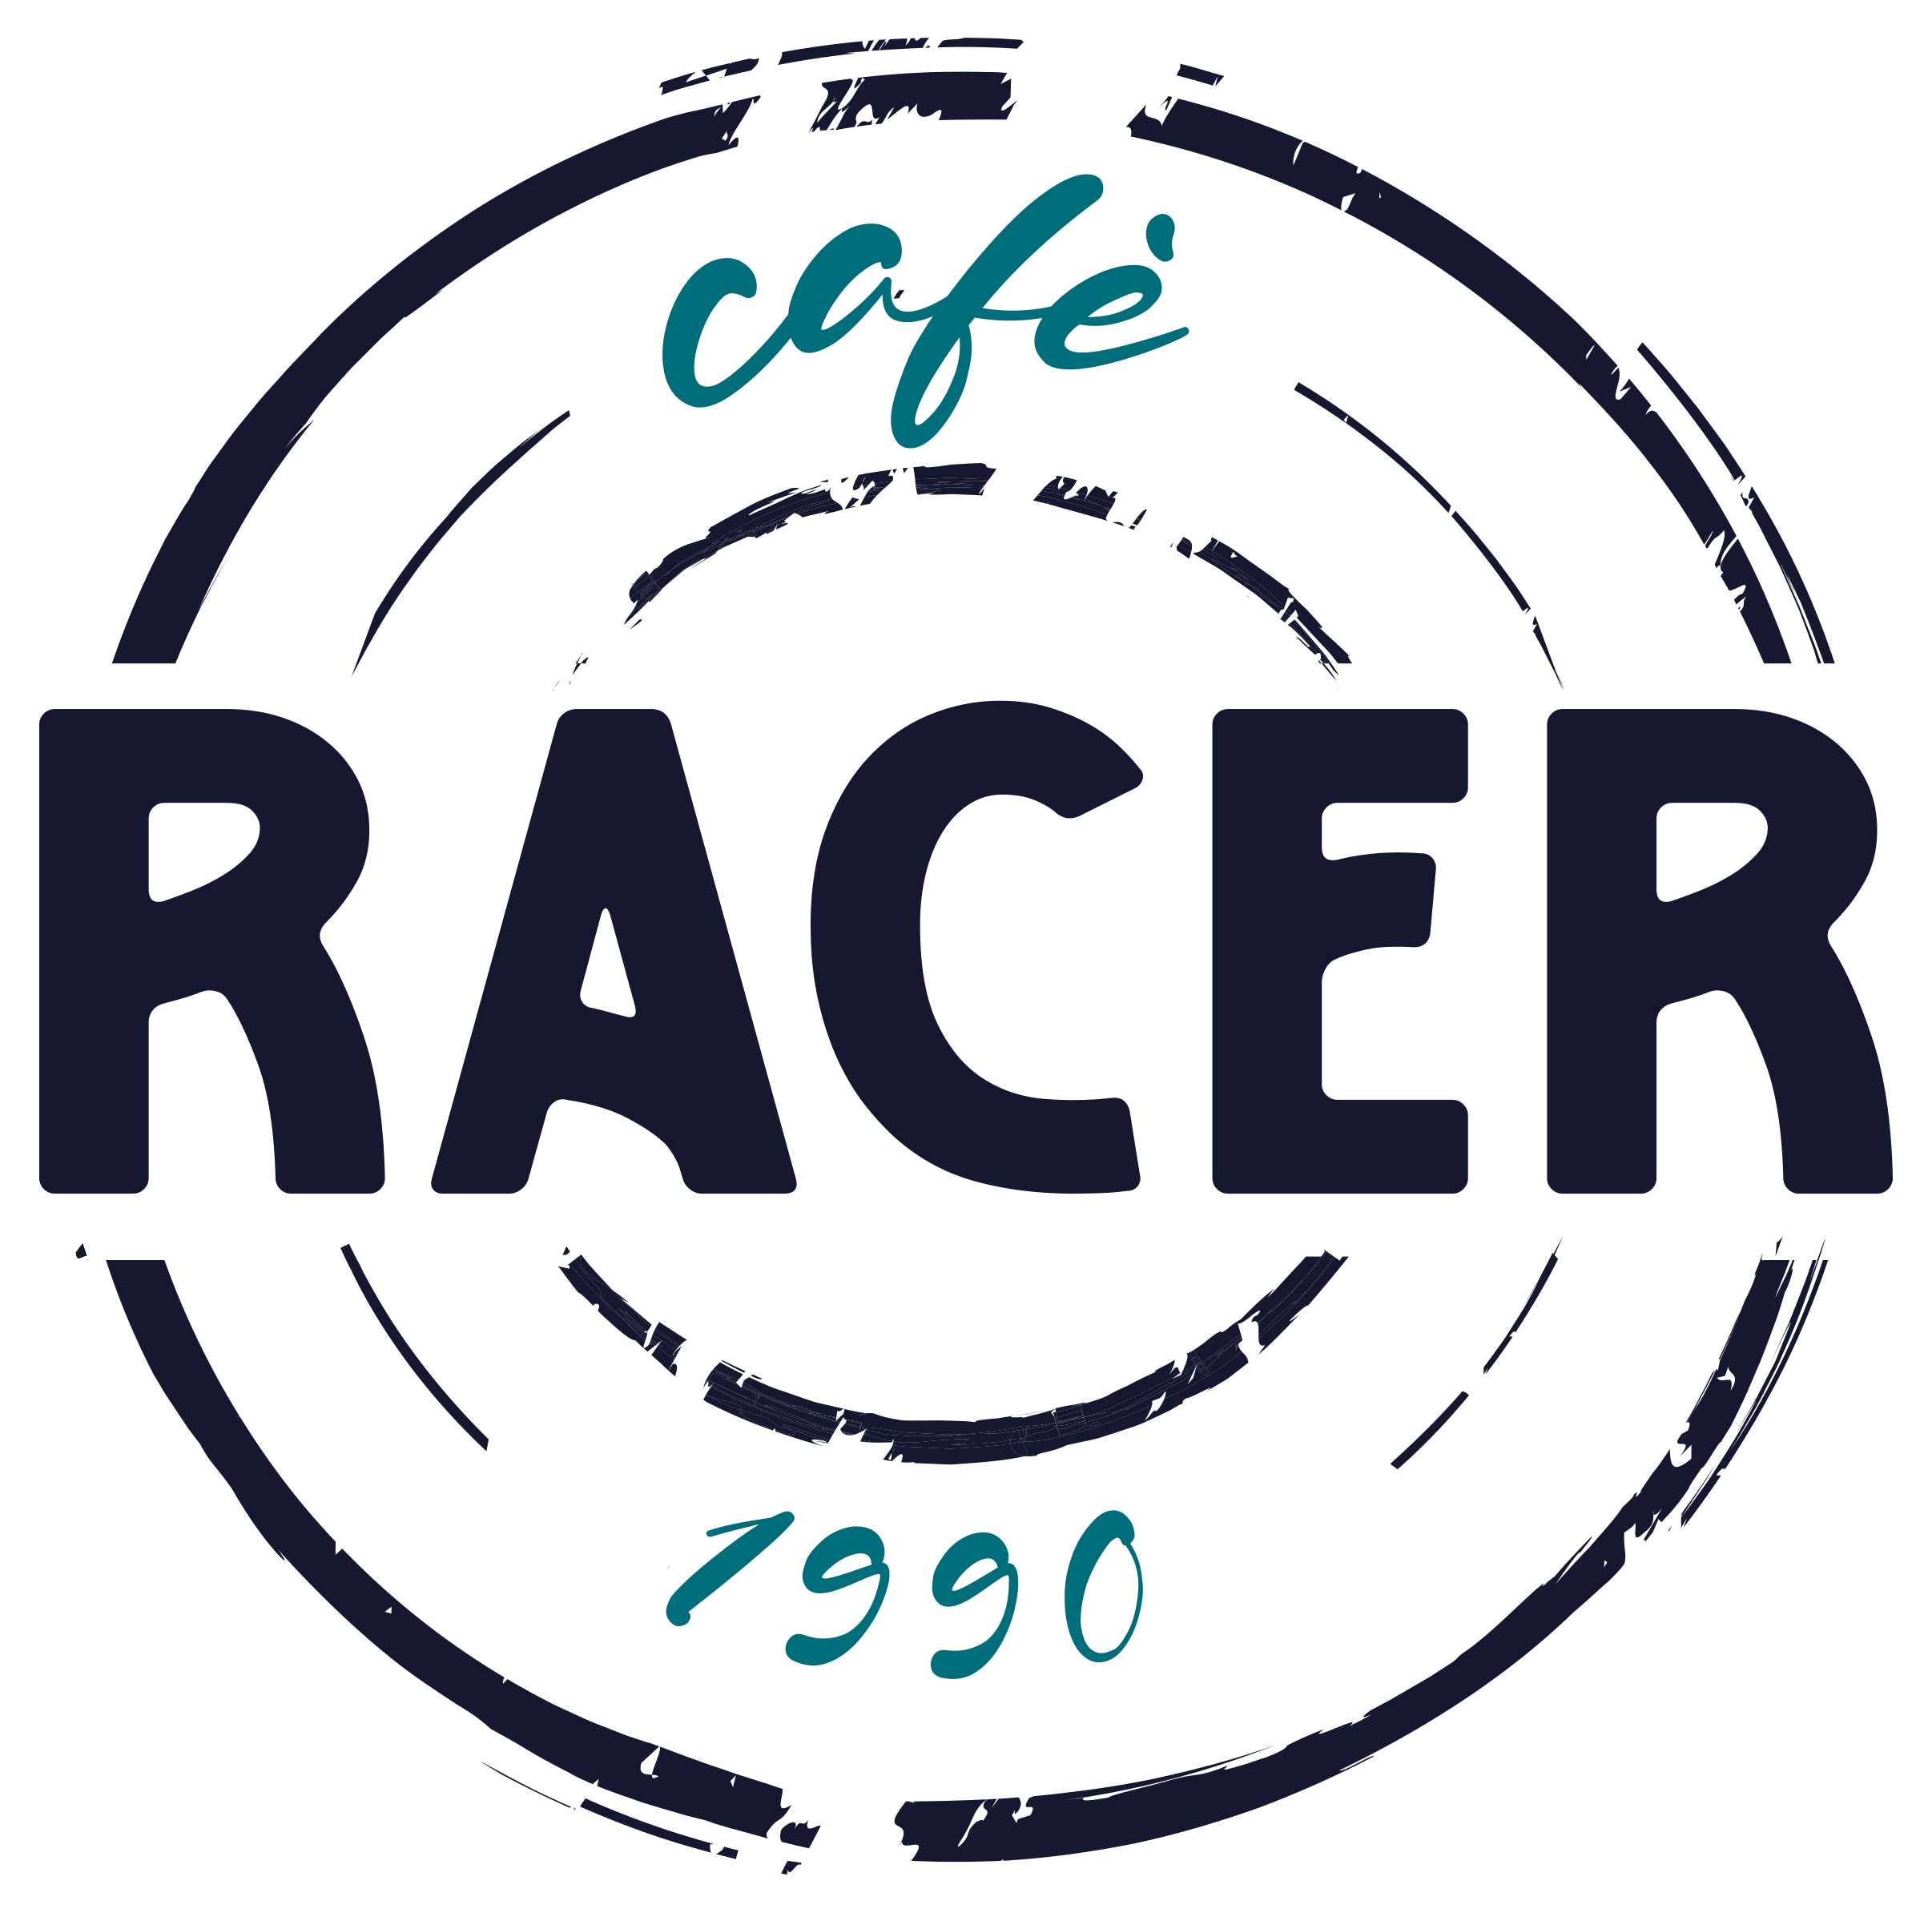 Immagine sponsor Cafè Racer 1990